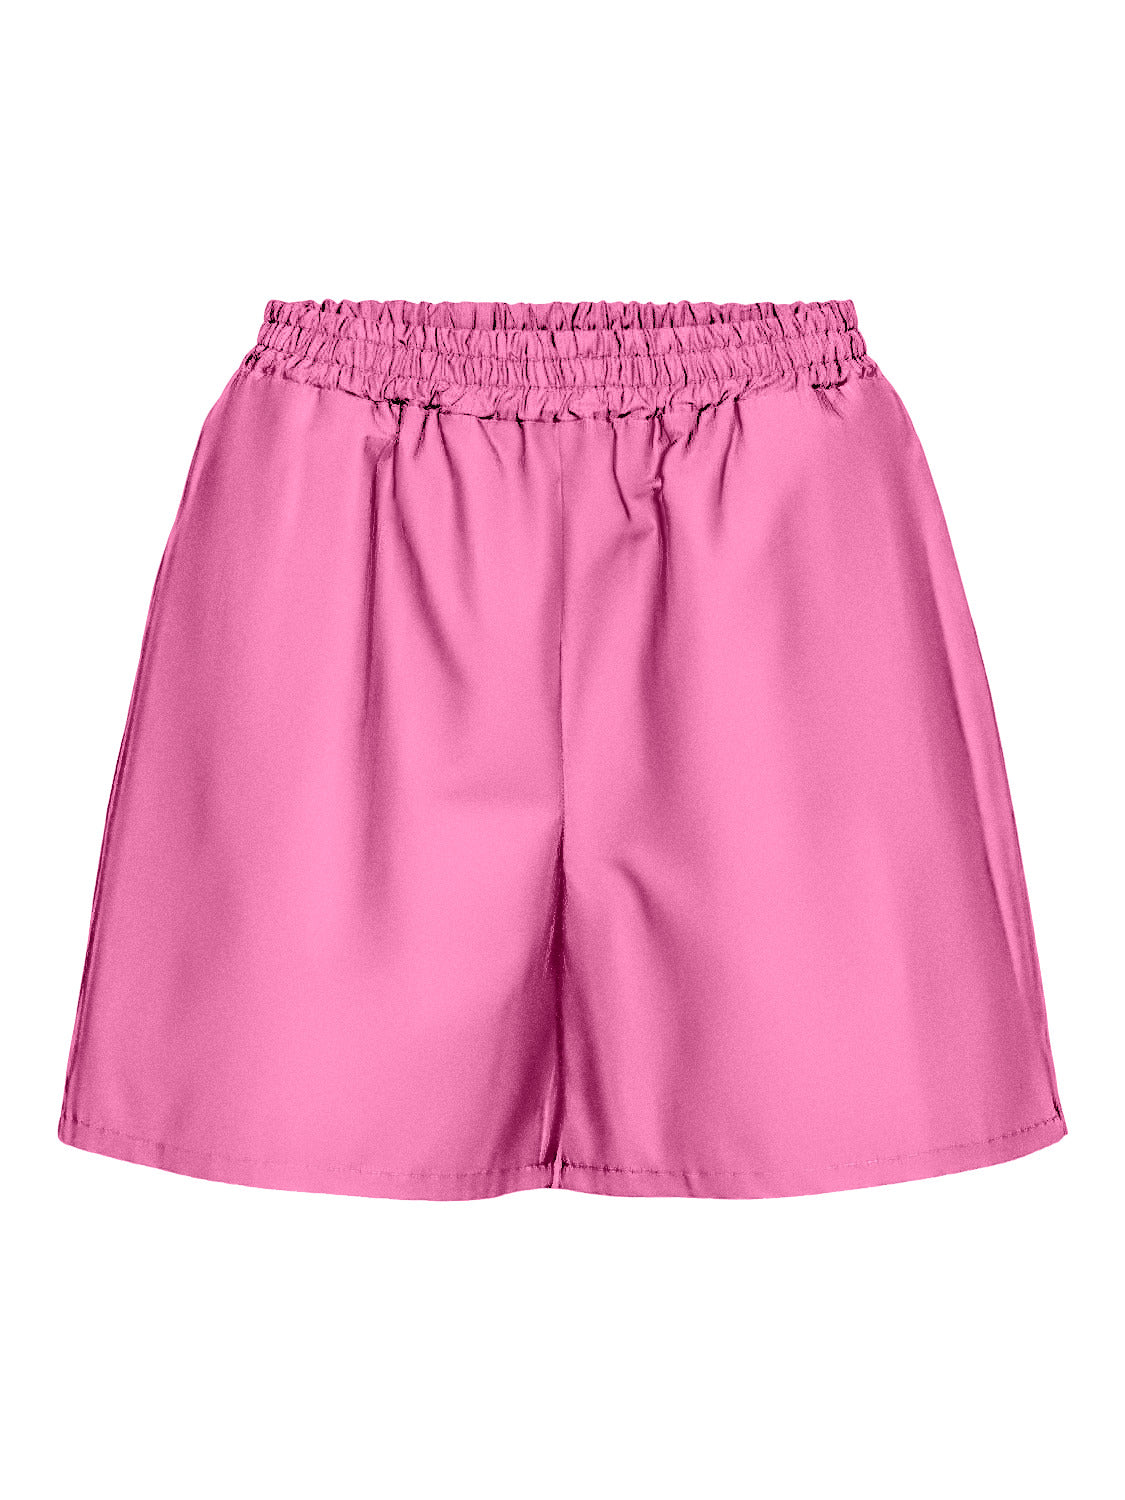 NMALAMO Shorts - Fuchsia Pink